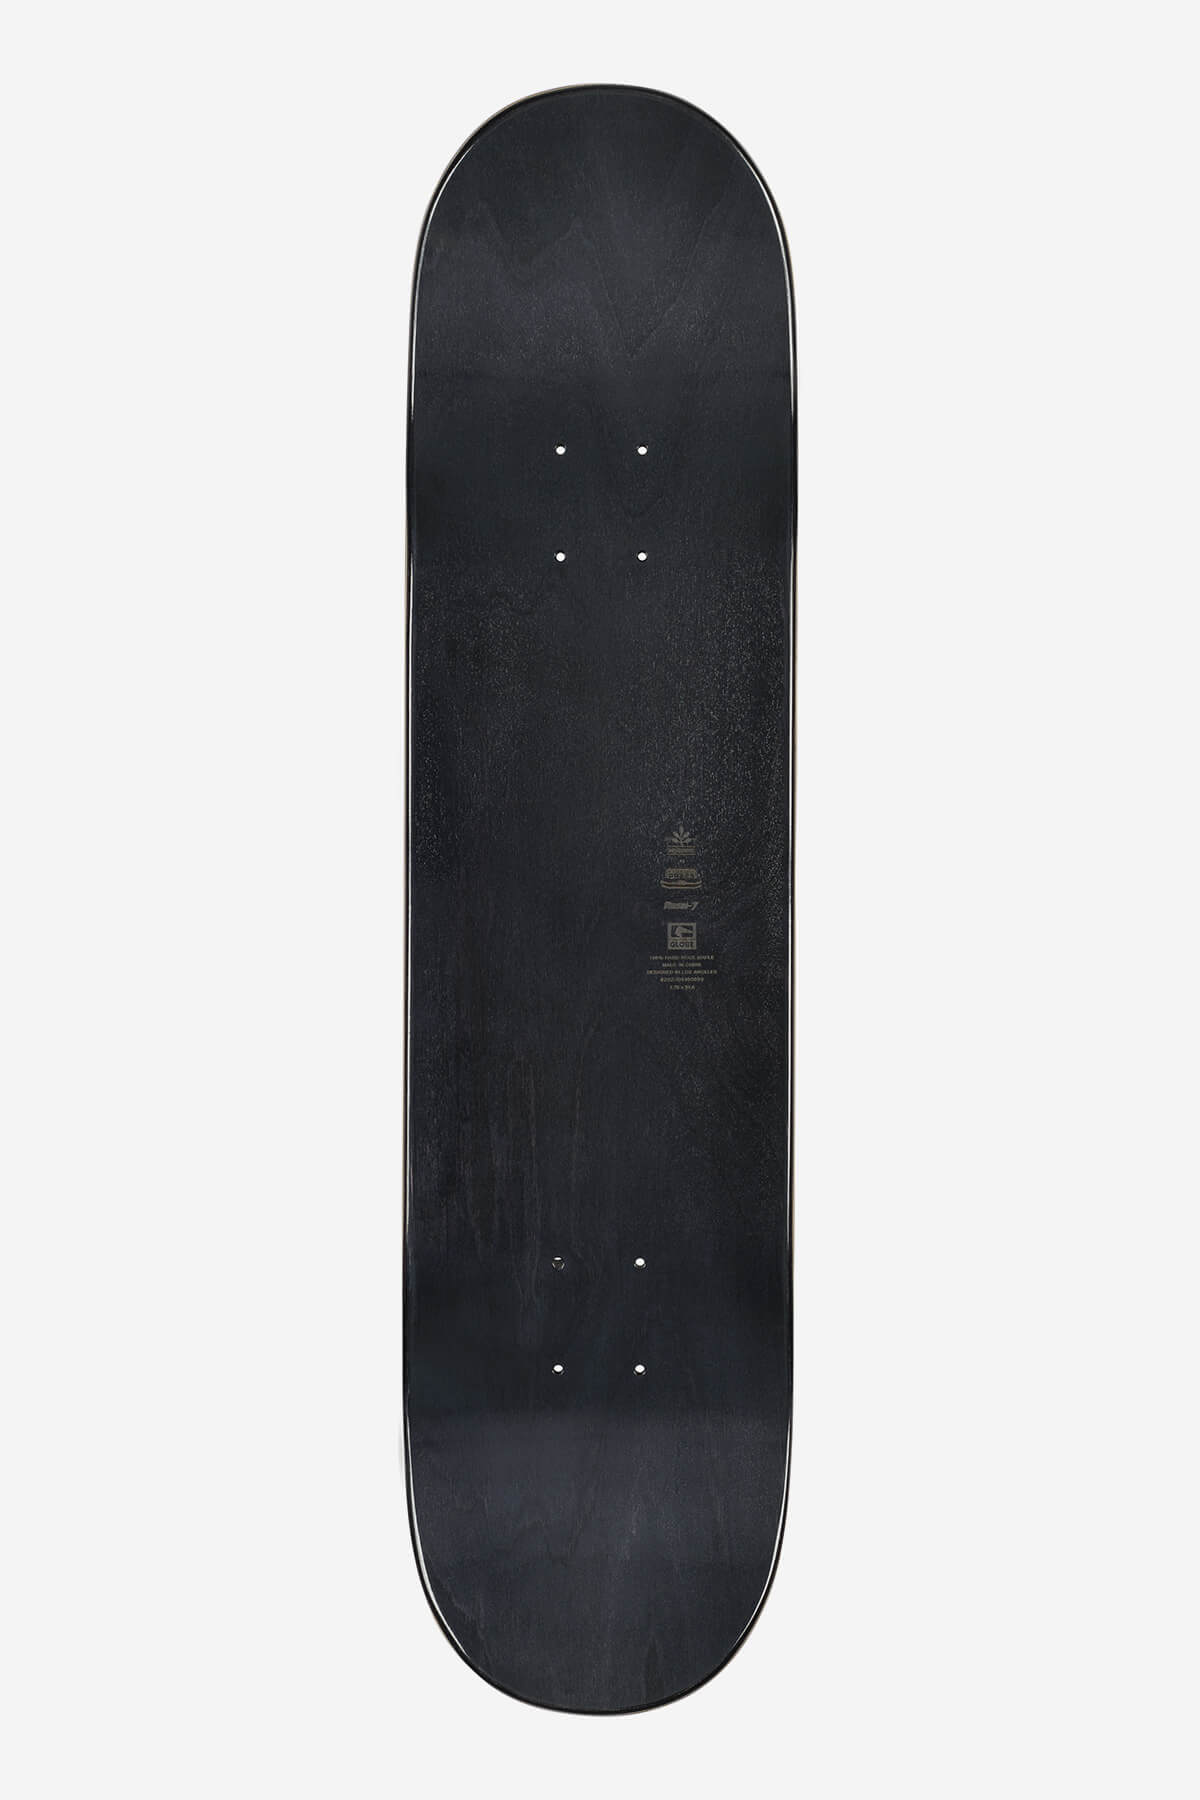 Globe - G1 Lineform - Schwarz - 7.75" Skateboard Deck